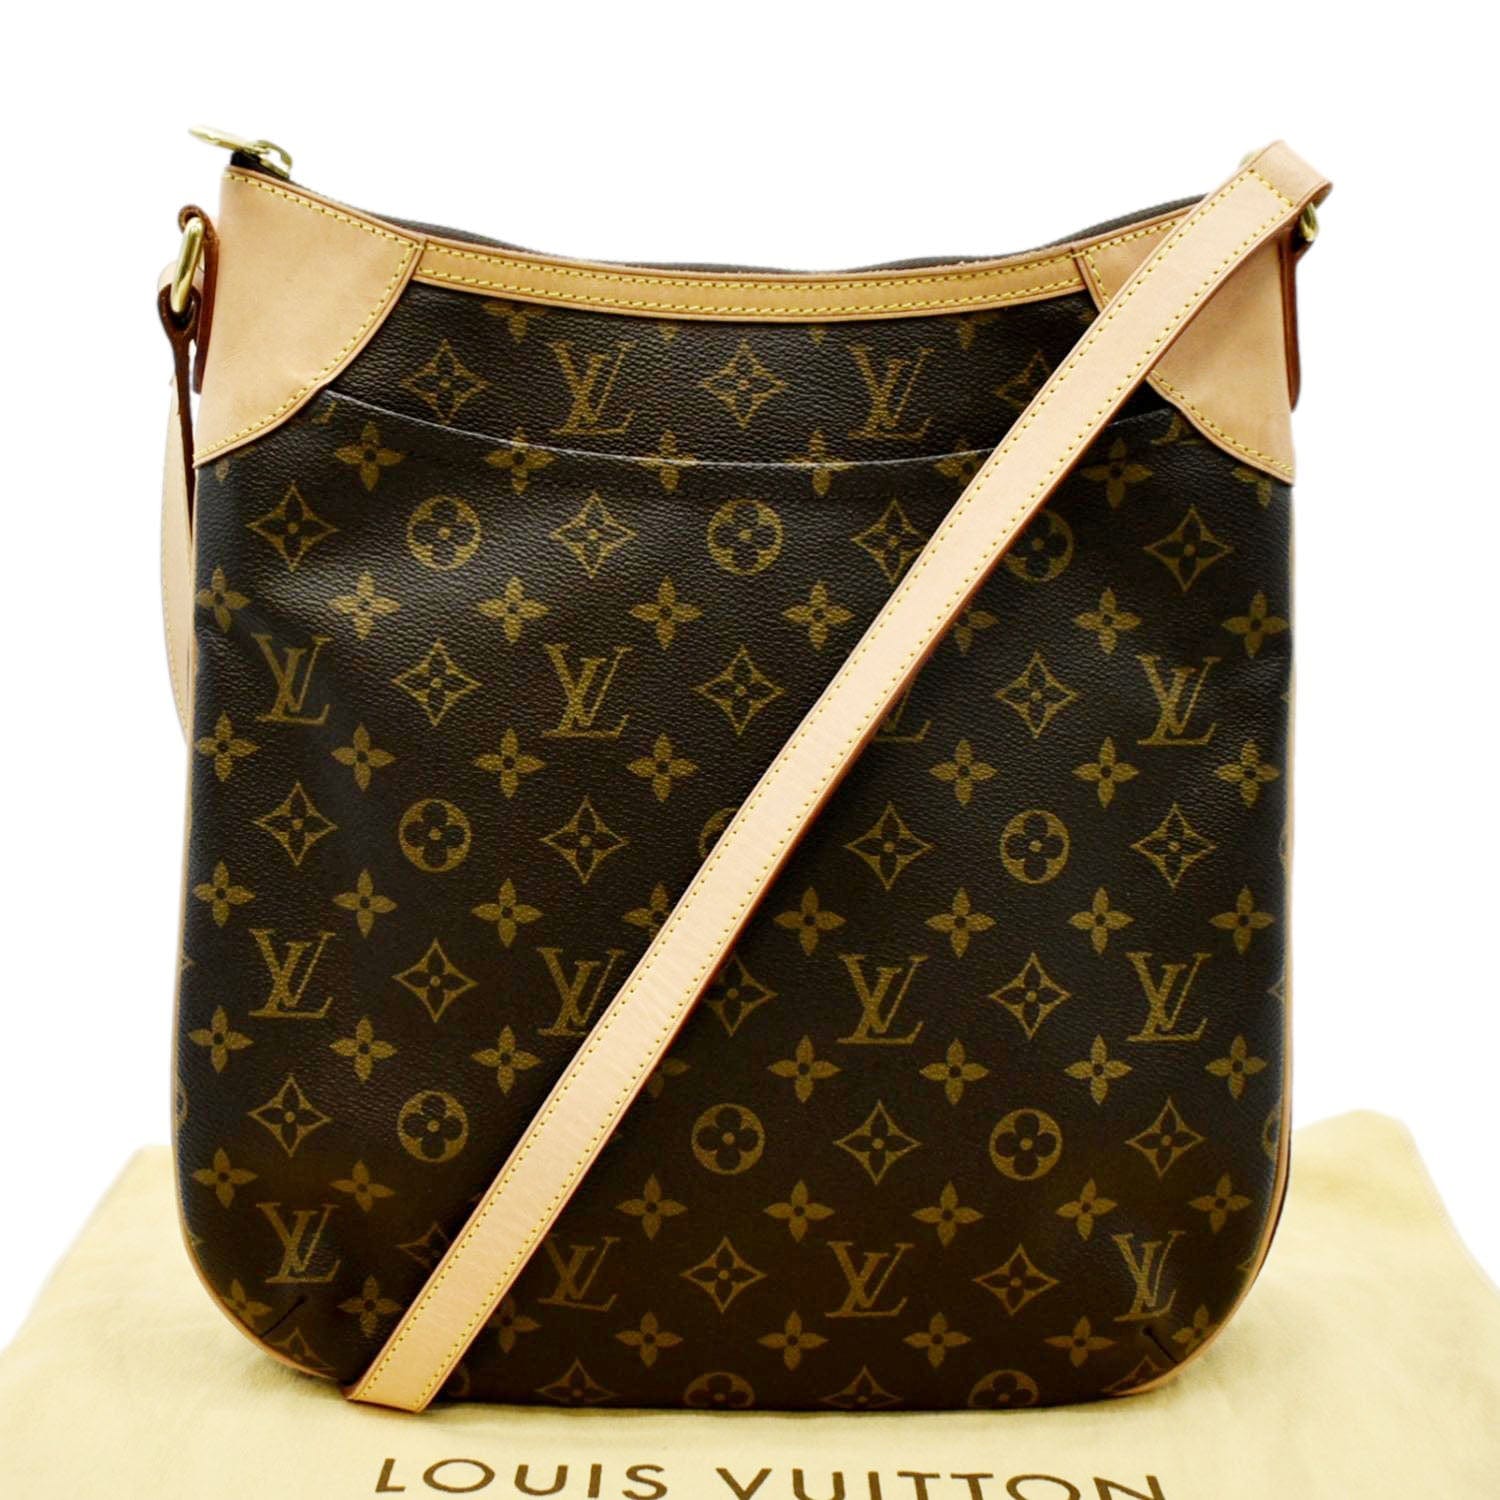 LOUIS VUITTON Monogram Odeon MM M45352 Shoulder bag - Brand New